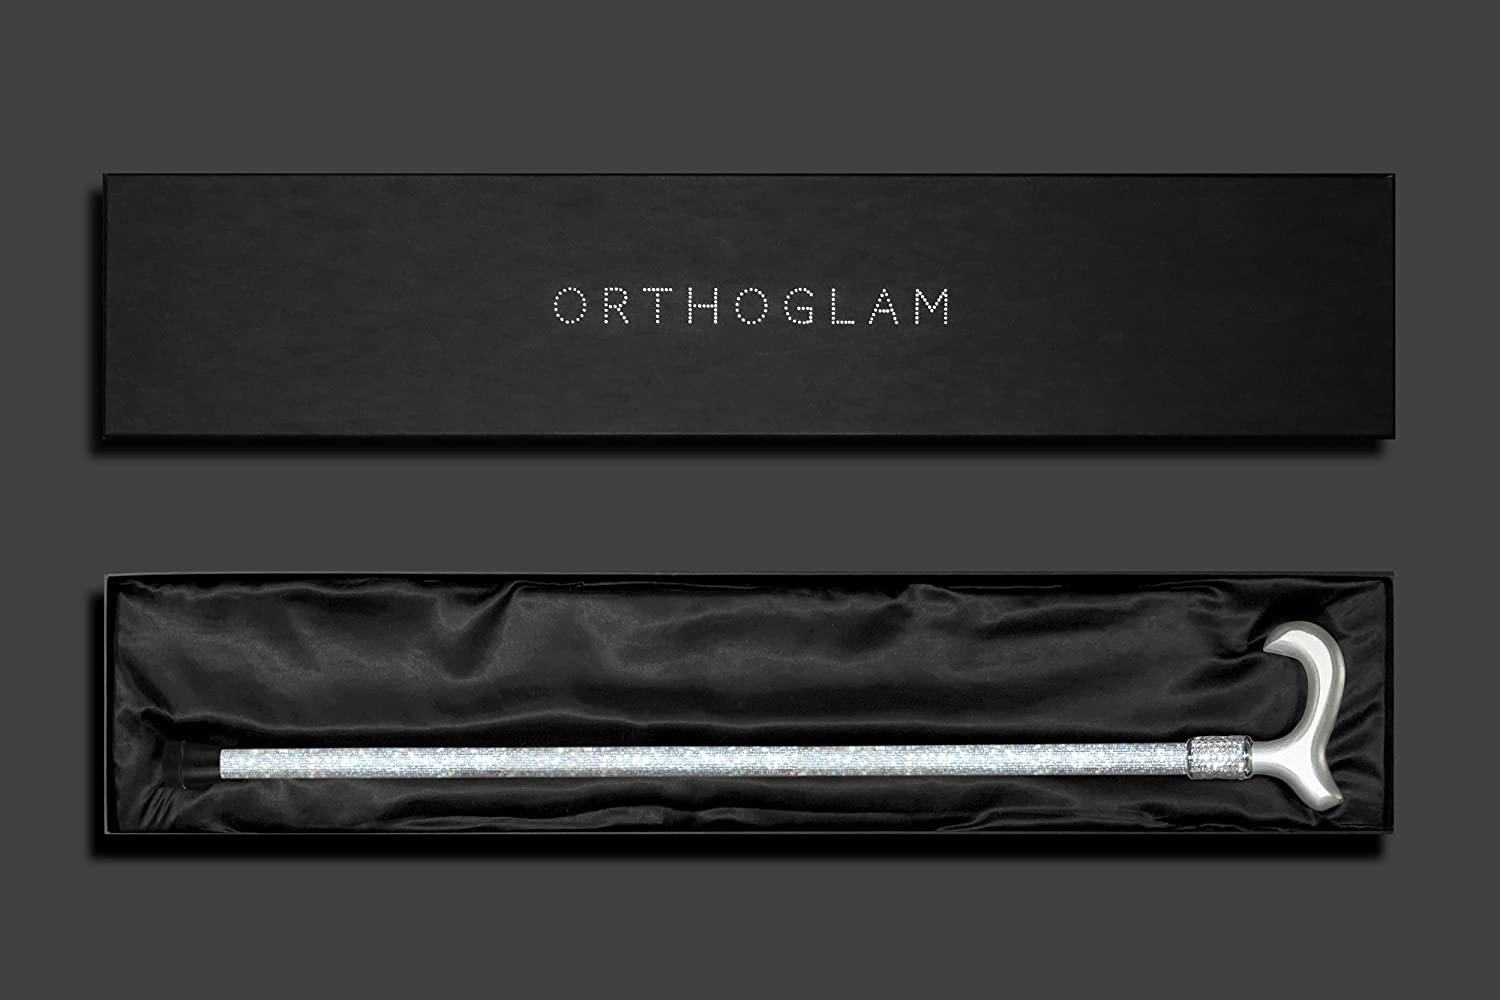 OrthoGlam “Silver Screen” Lightweight Crystal Rhinestone Bedazzled